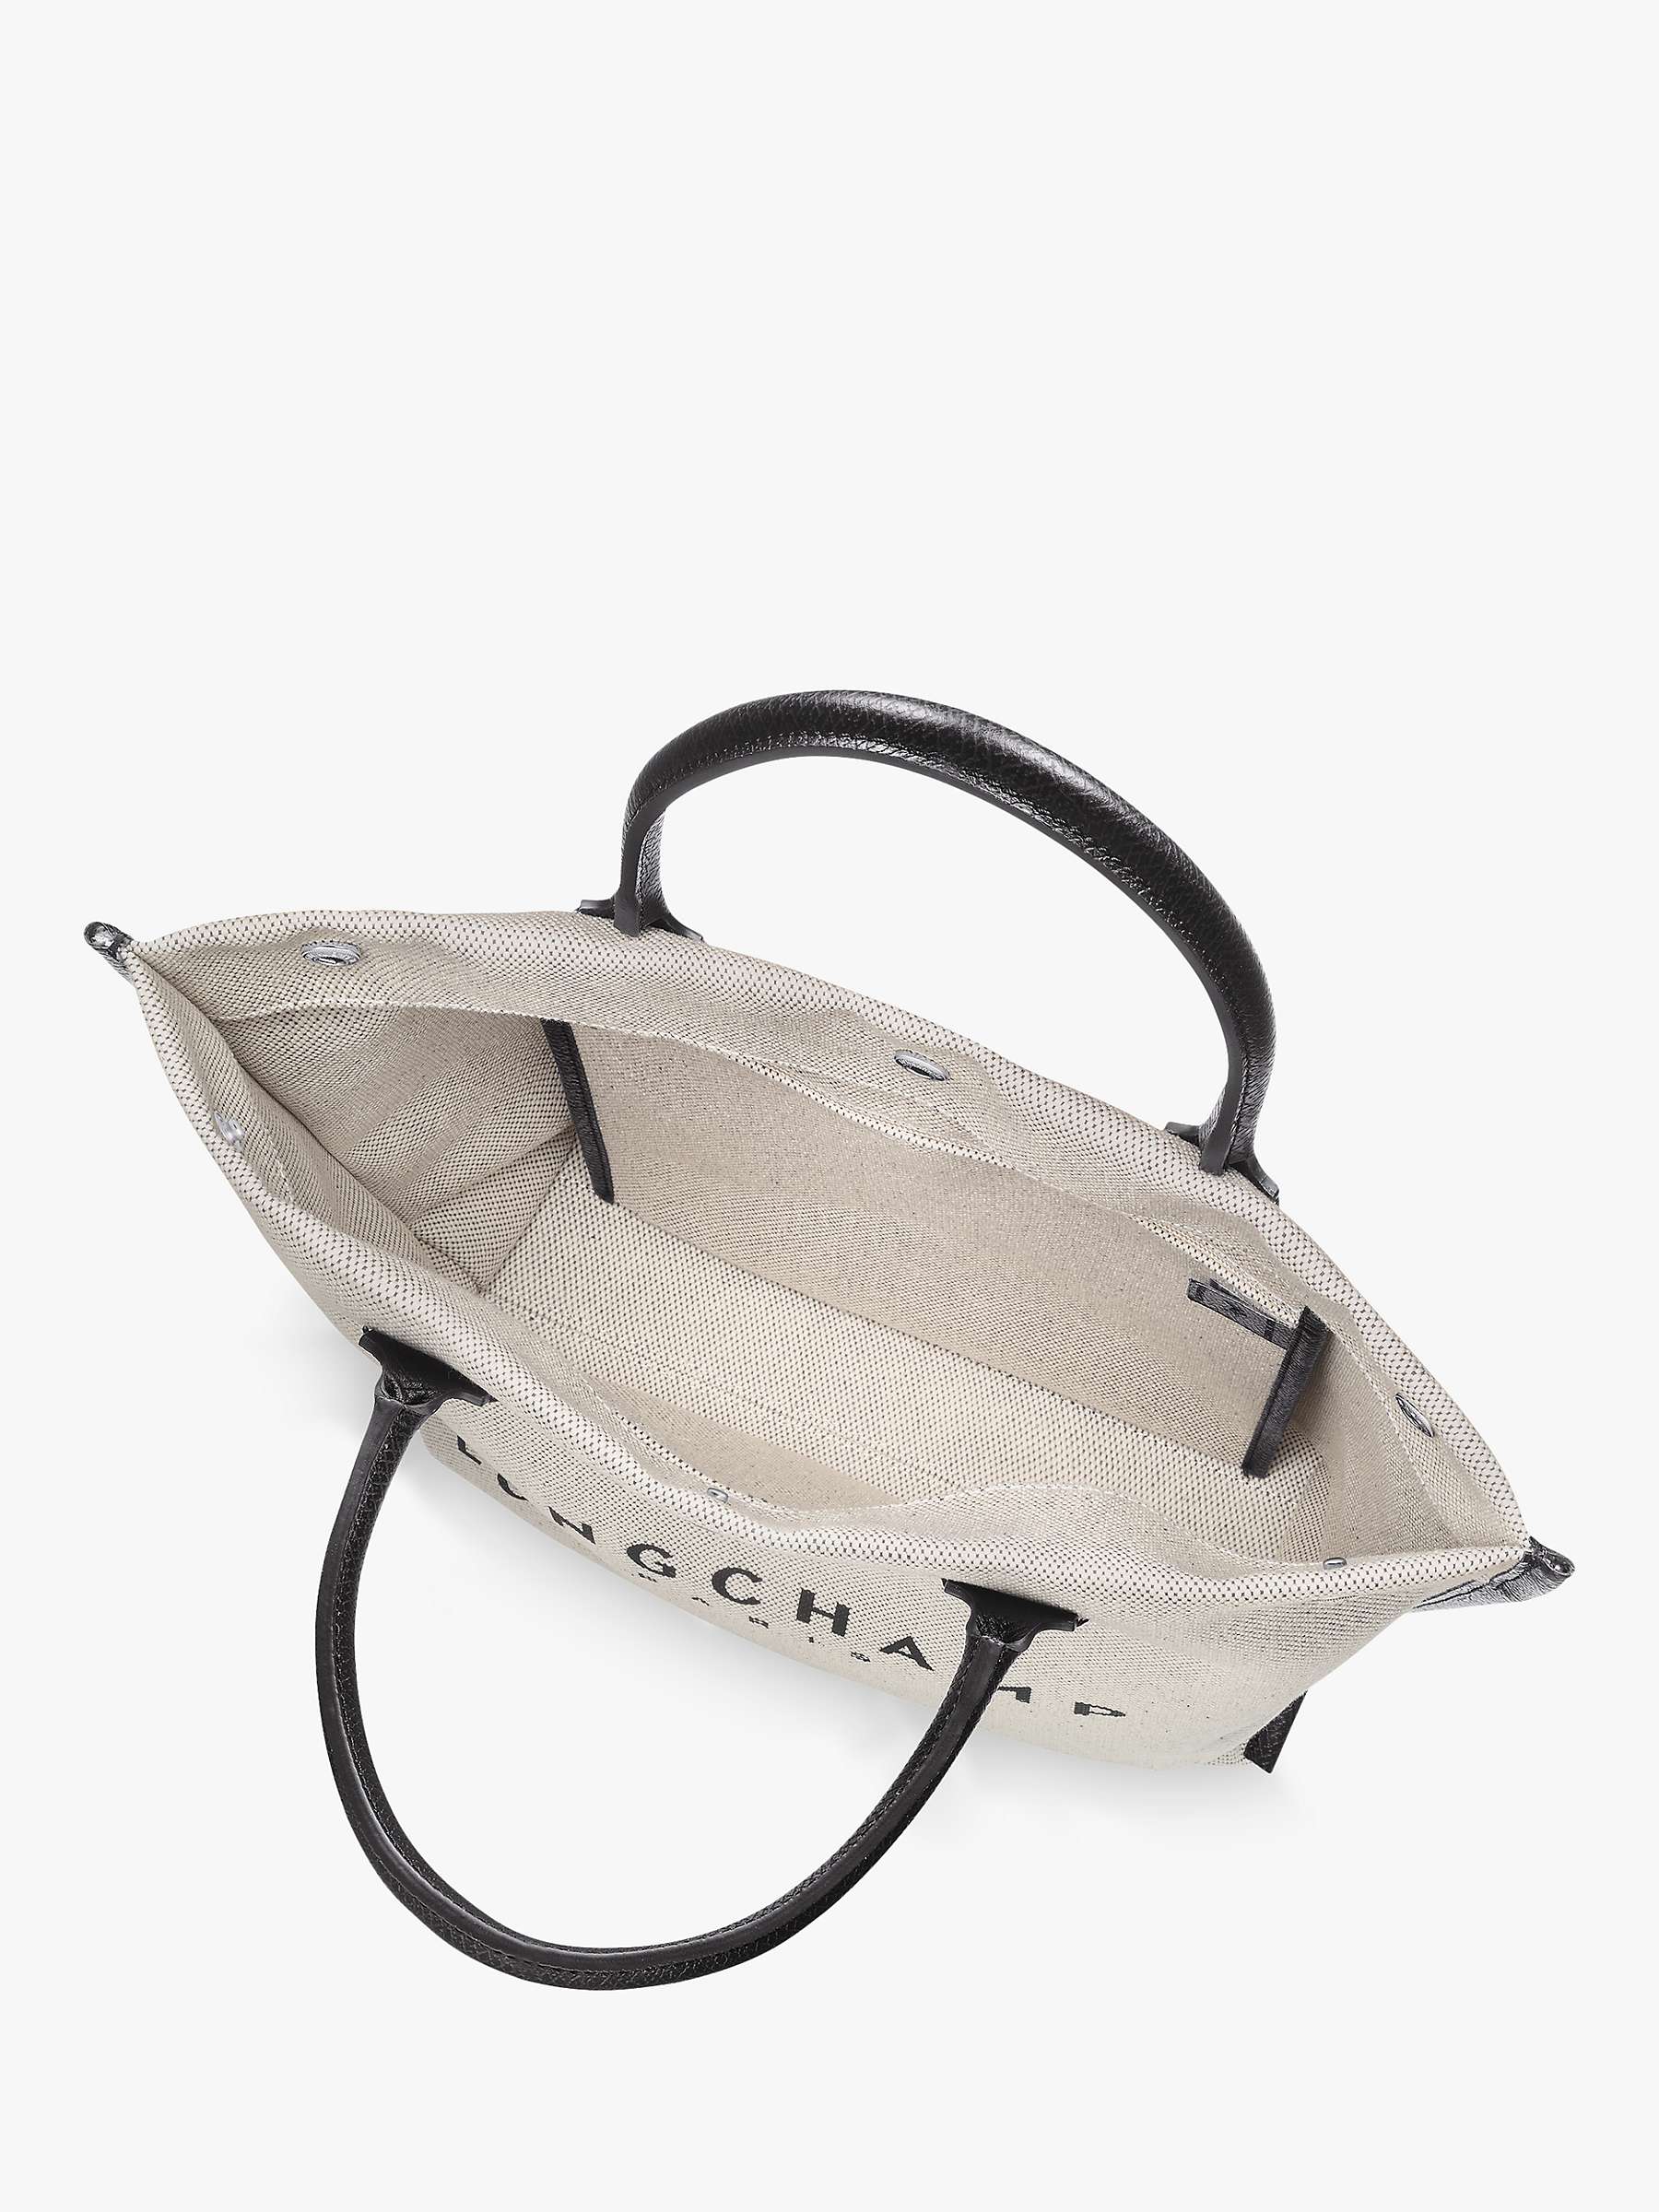 Buy Longchamp Essential Medium Canvas Tote Bag, Ecru Online at johnlewis.com